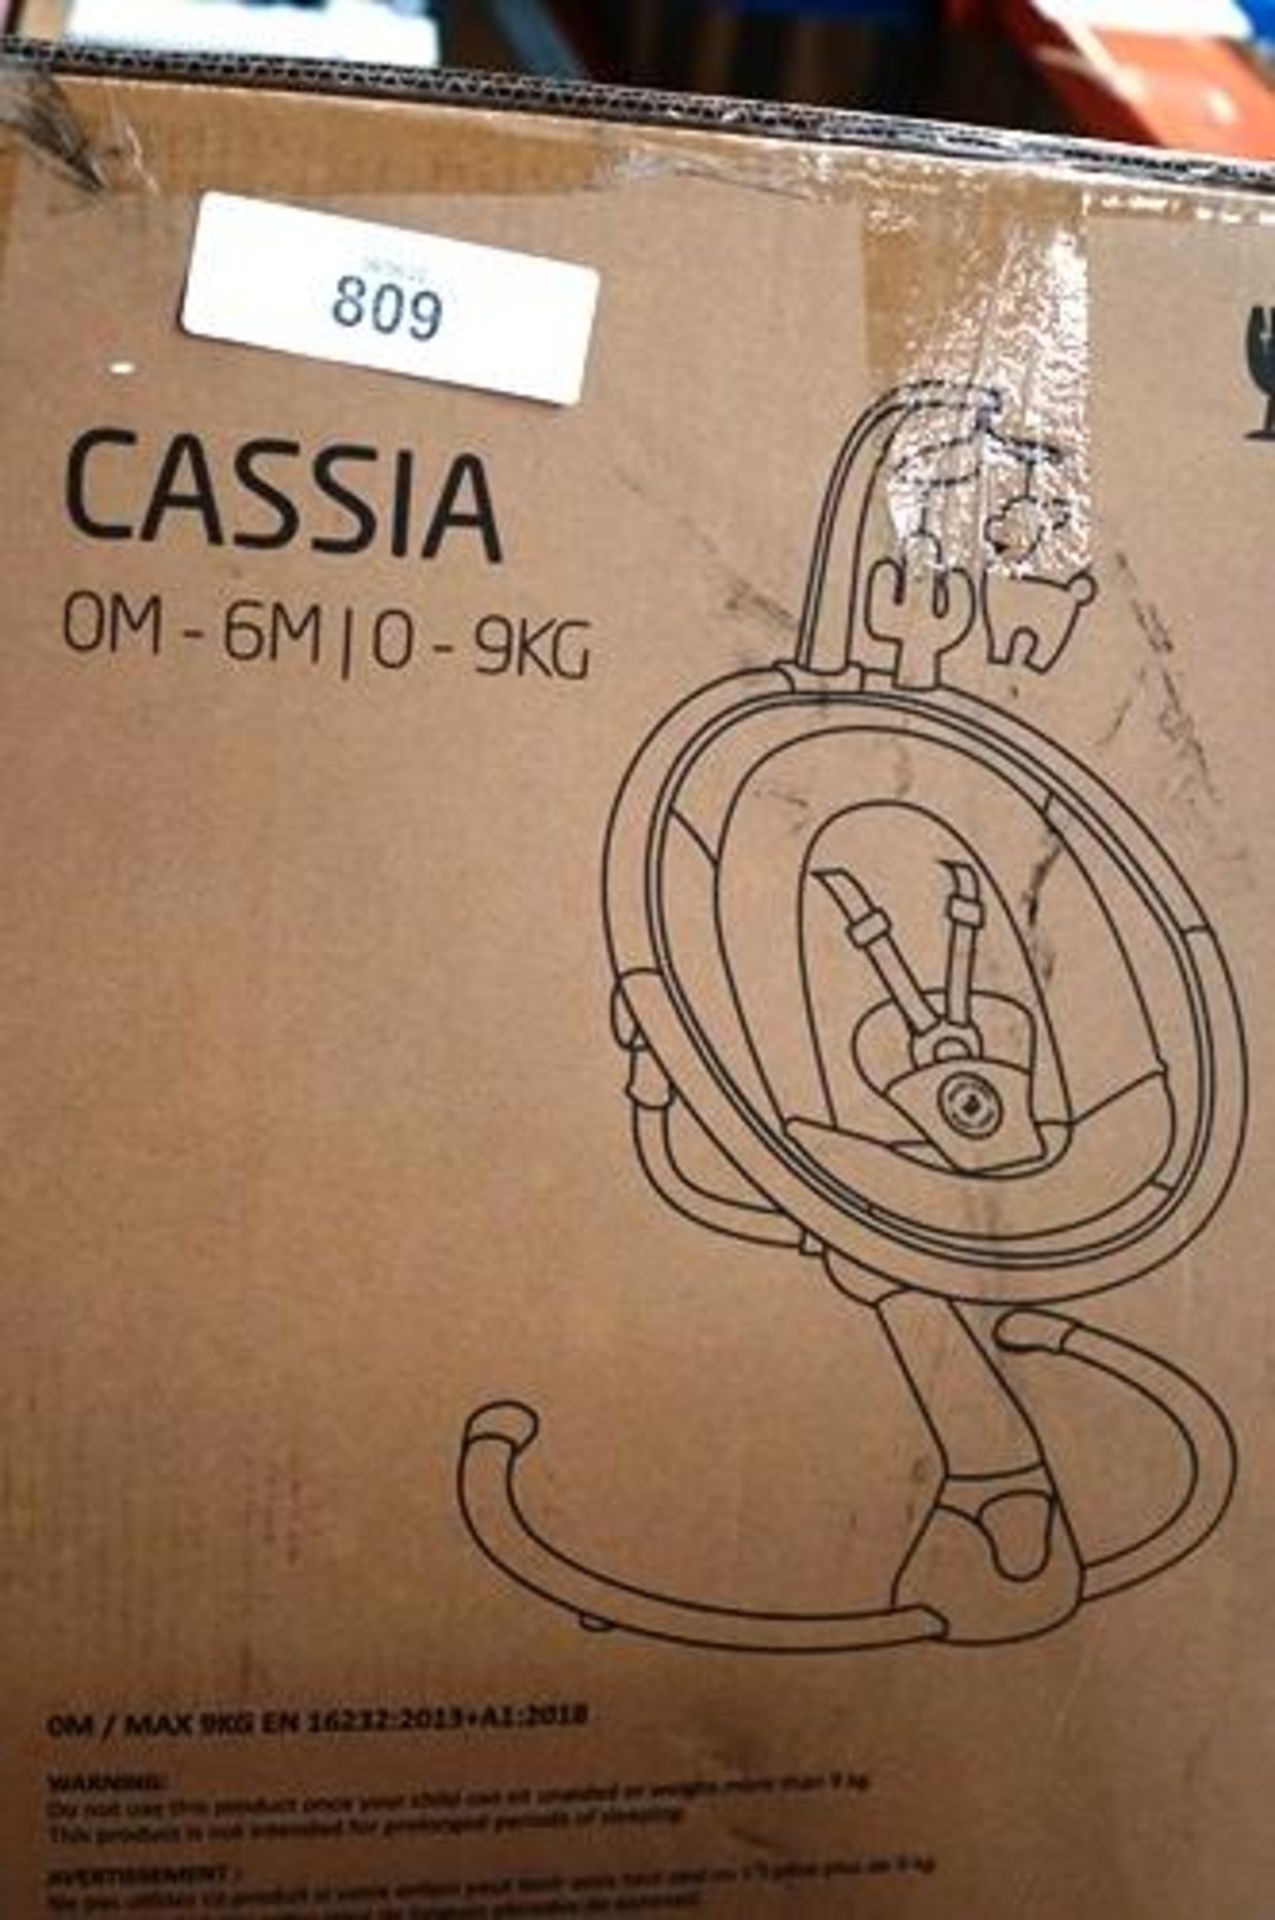 1 x Maxi Cosi Cassia rocker essential graphite 0-6M item code: 2840750300. -new in box- (GS36A)